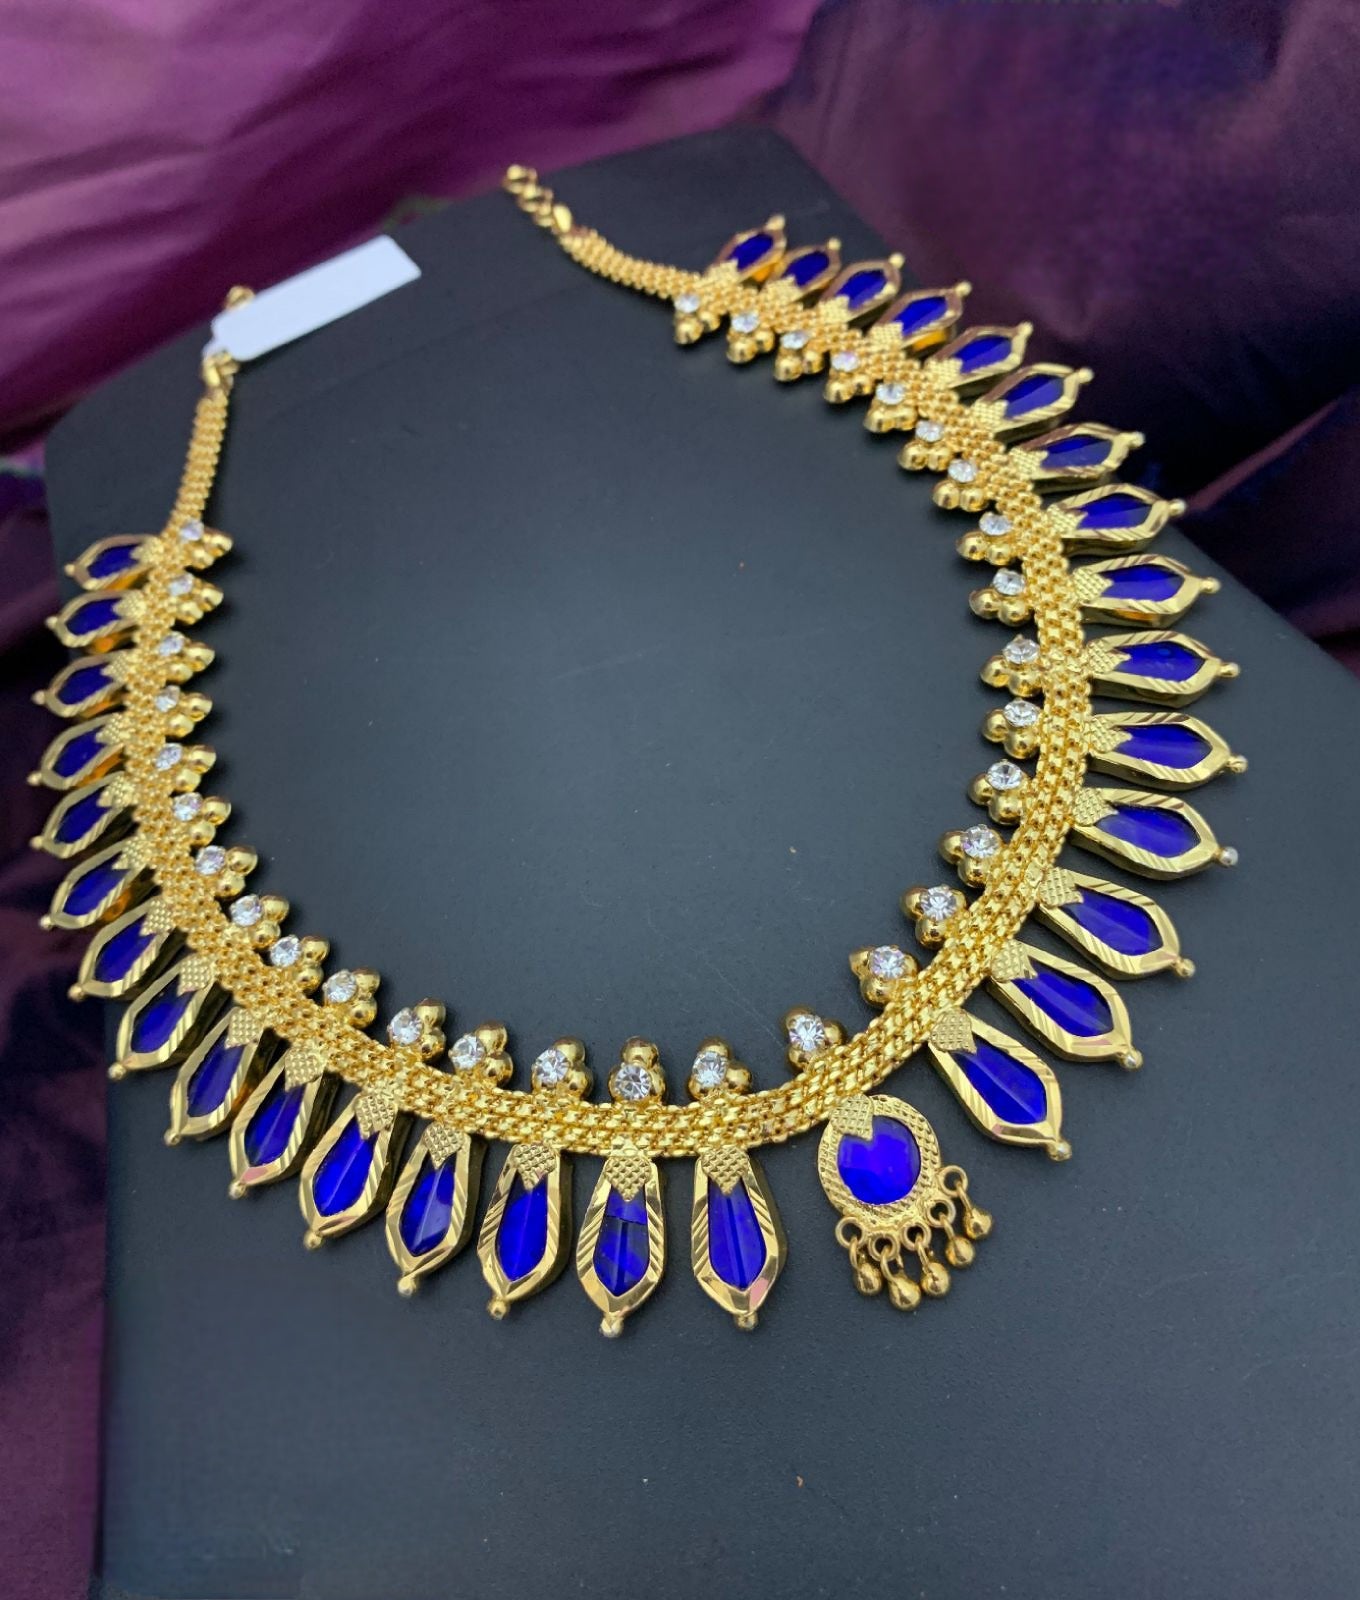 Traditional South Indian Kerala Nagapadam choker necklace